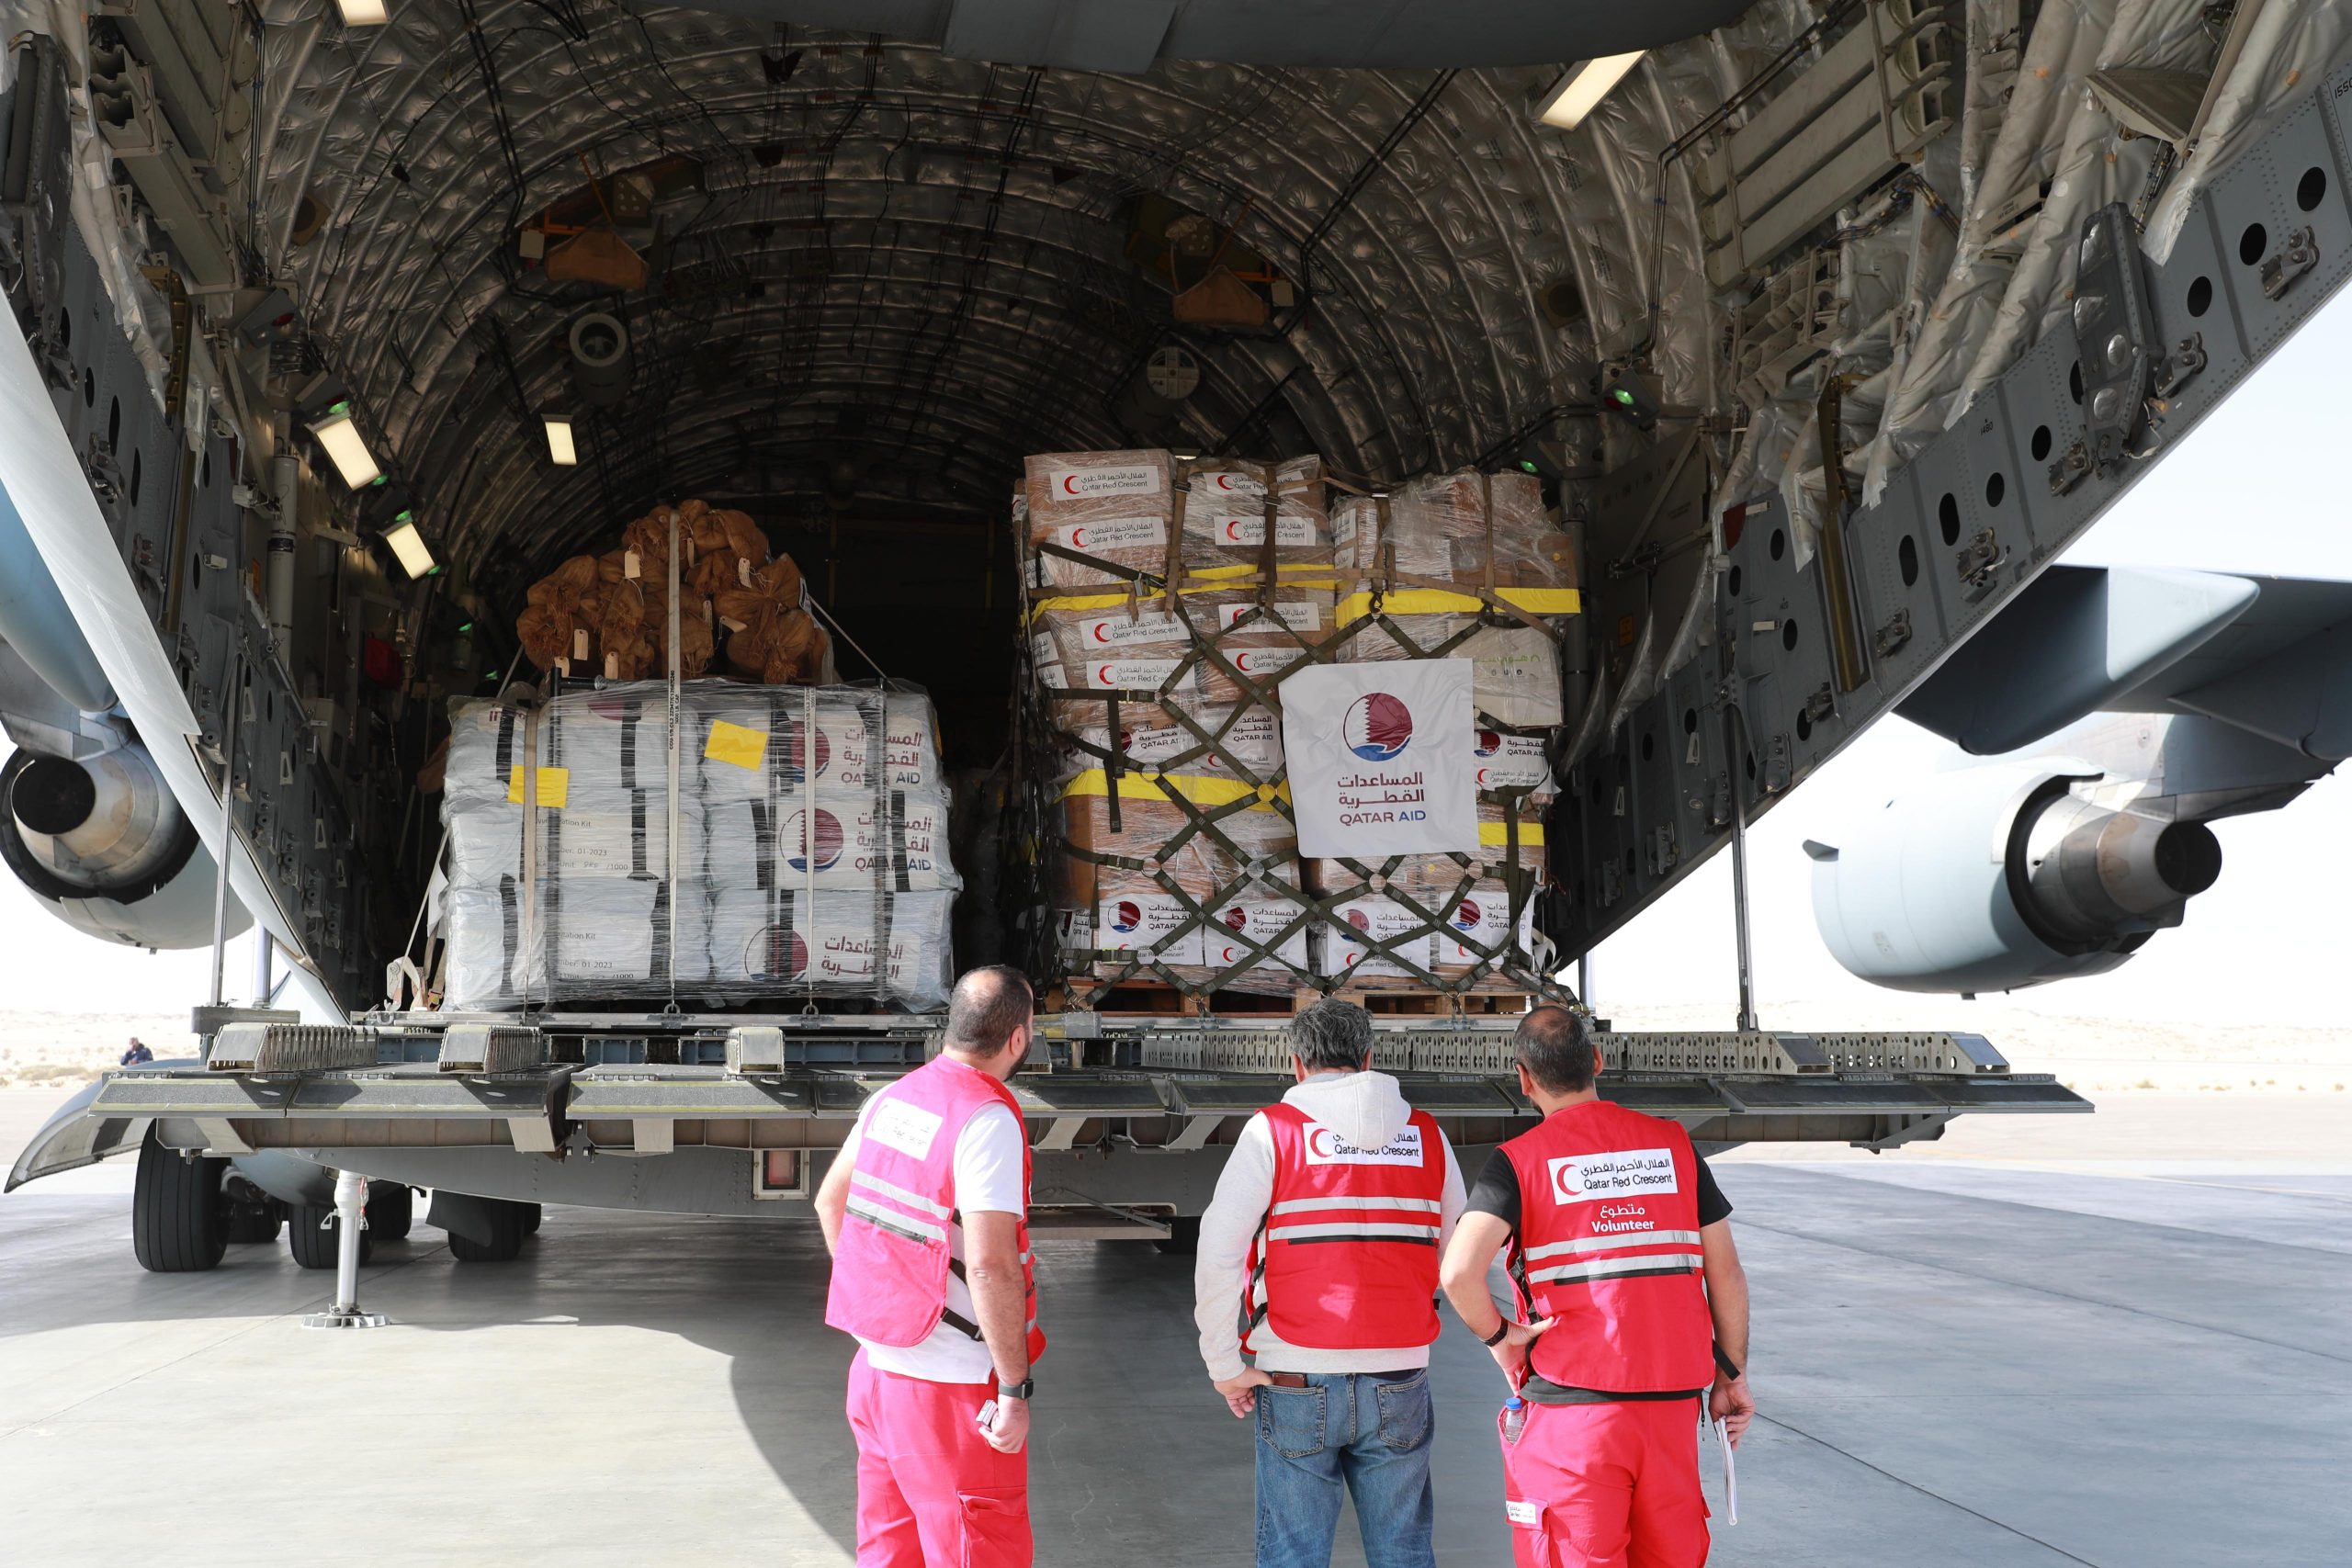 Qatari aid plane for Gaza lands in Egypt’s El Arish with food supplies